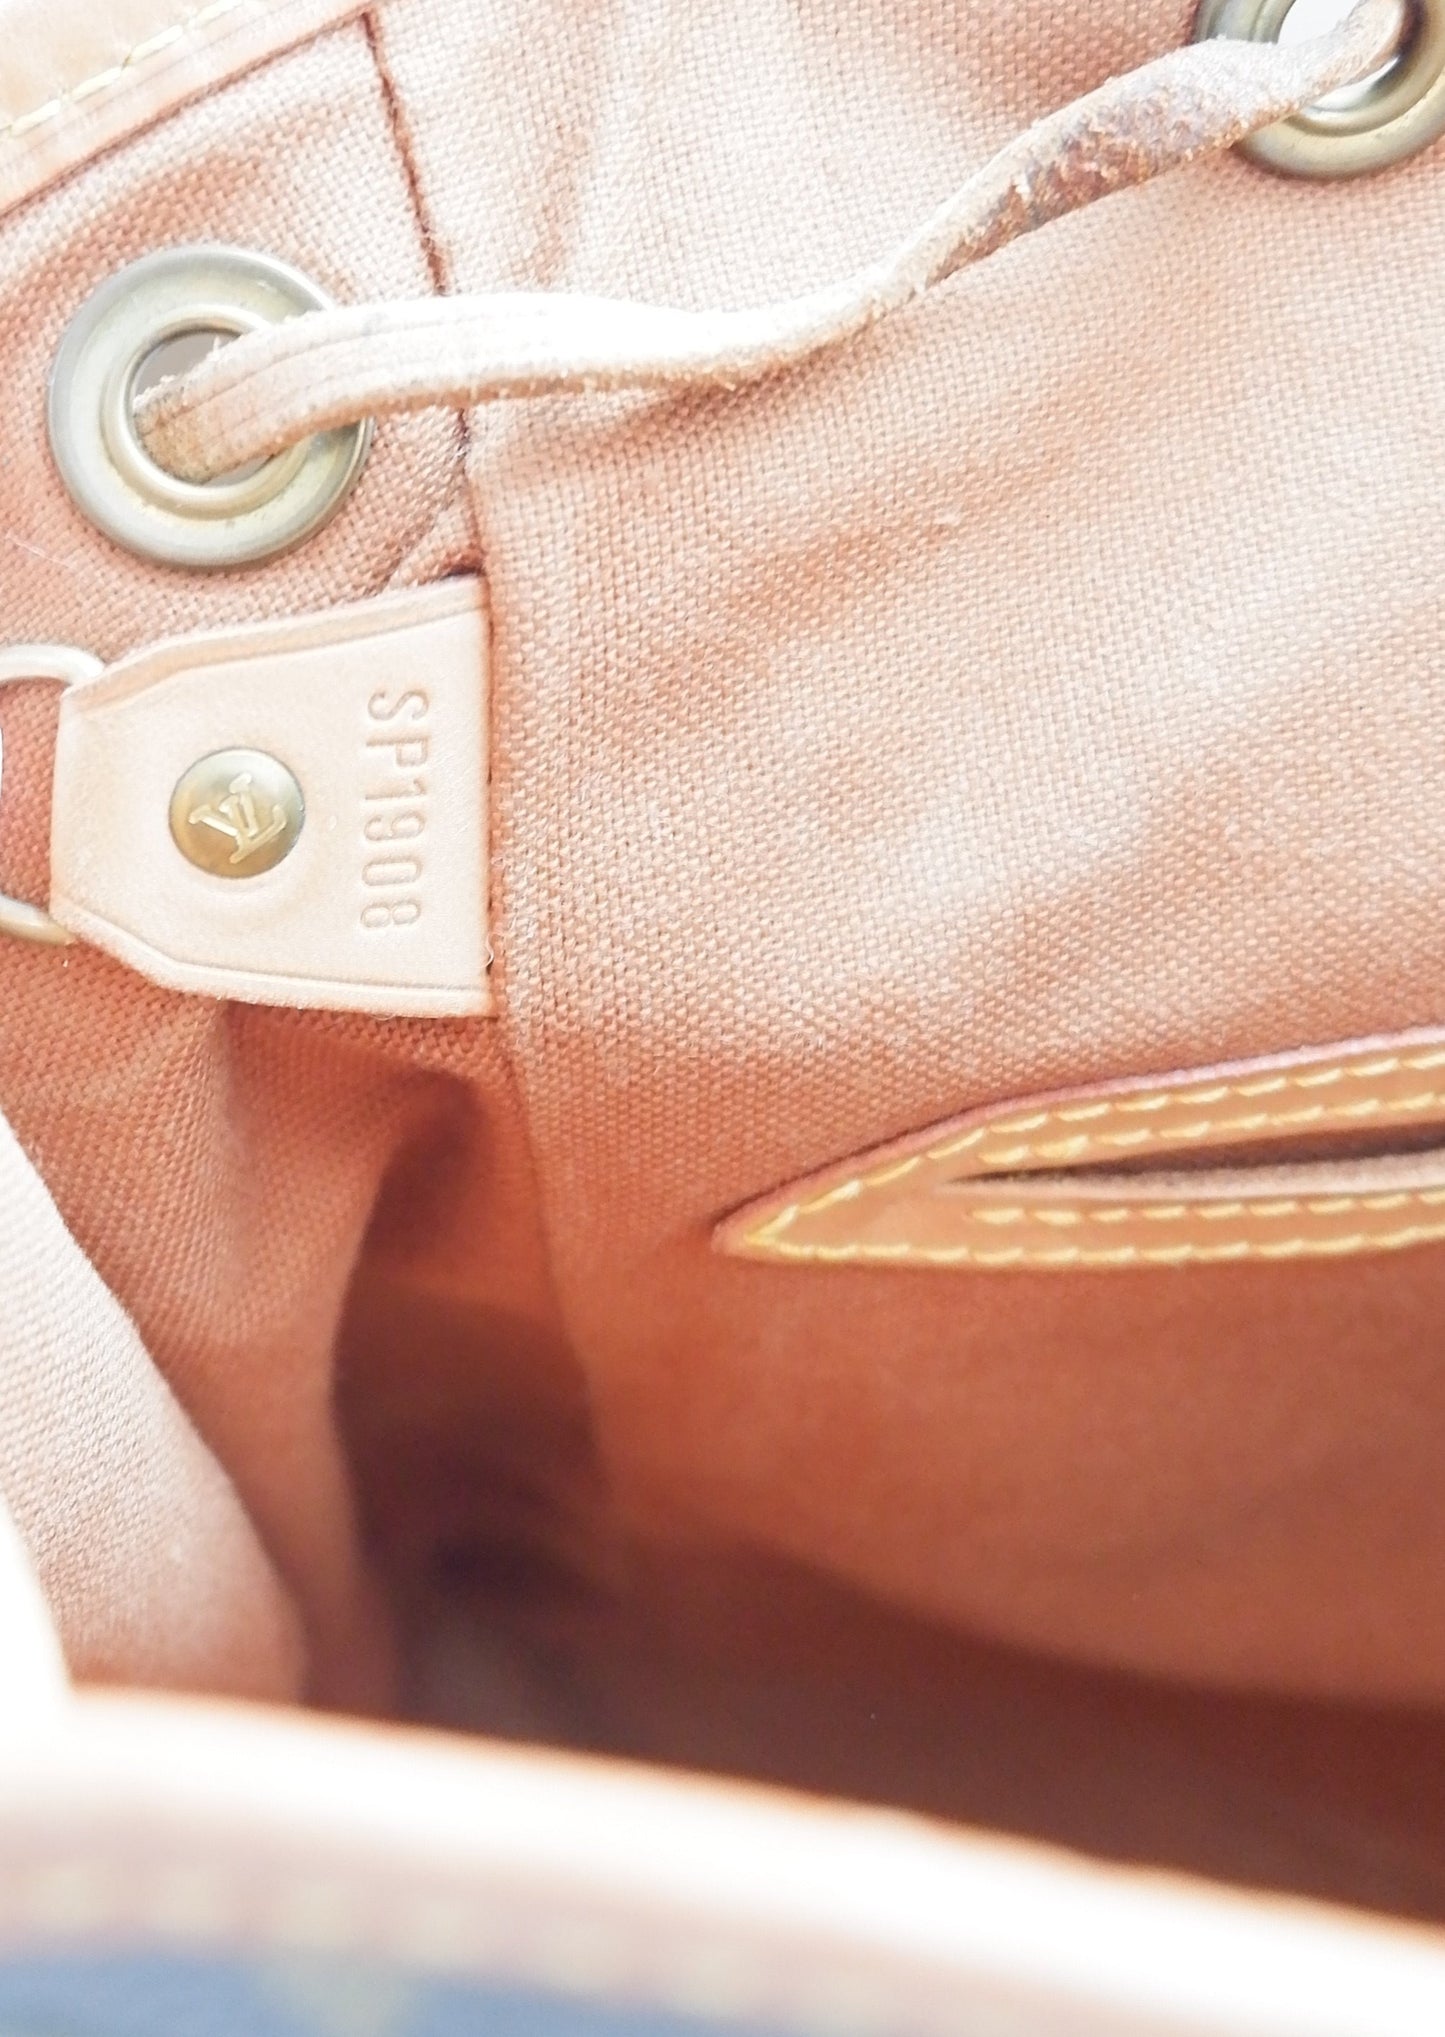 Authentic Preowned Vintage Louis Vuitton Monogram Montsouris Backpack